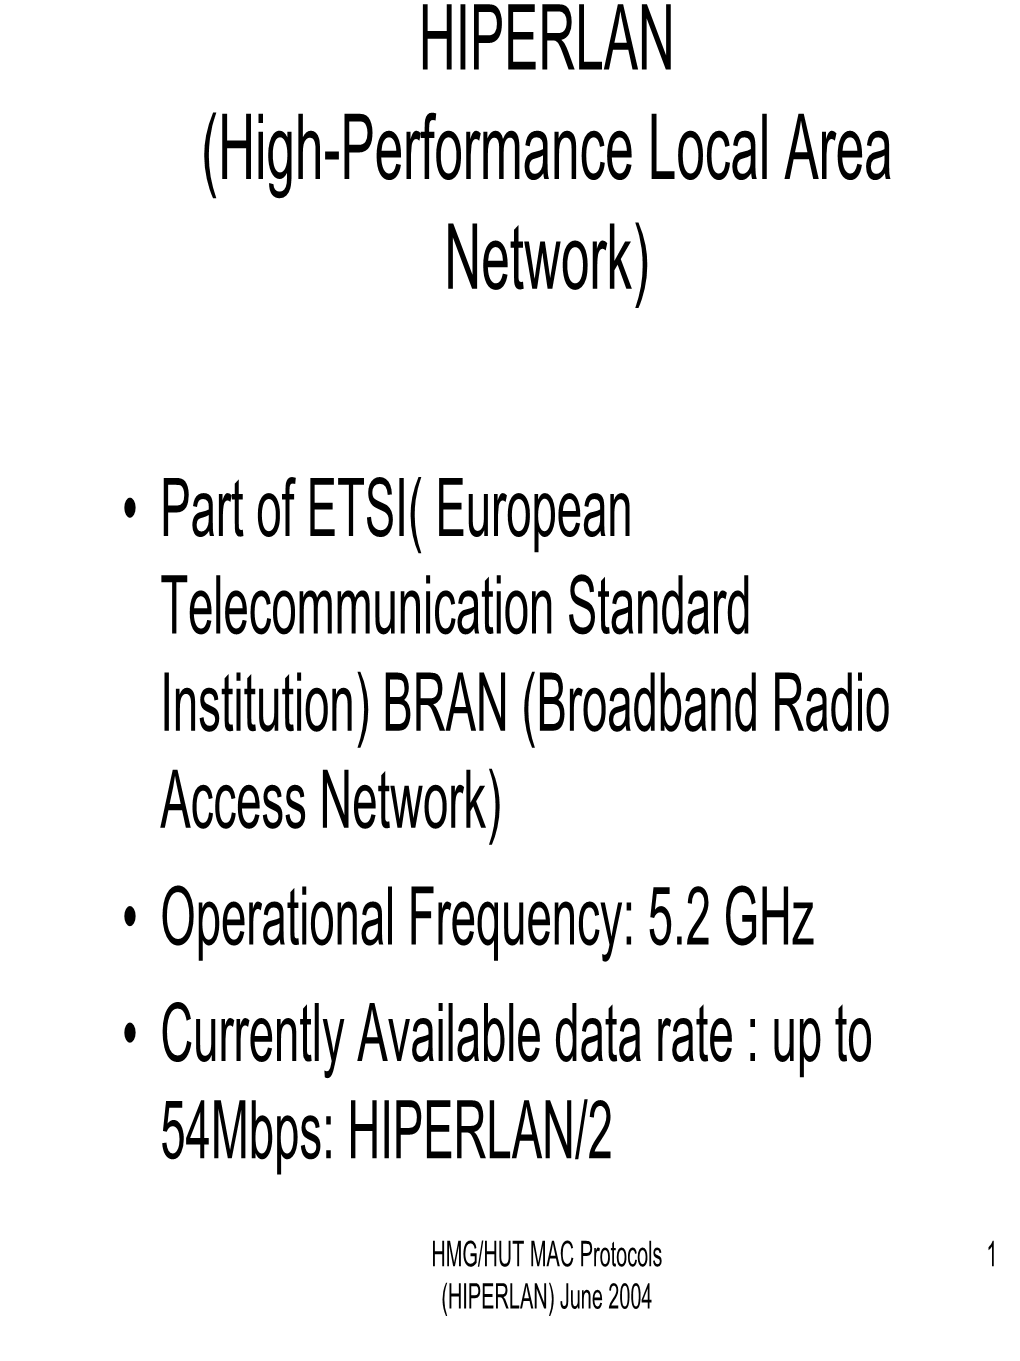 HIPERLAN (High-Performance Local Area Network)